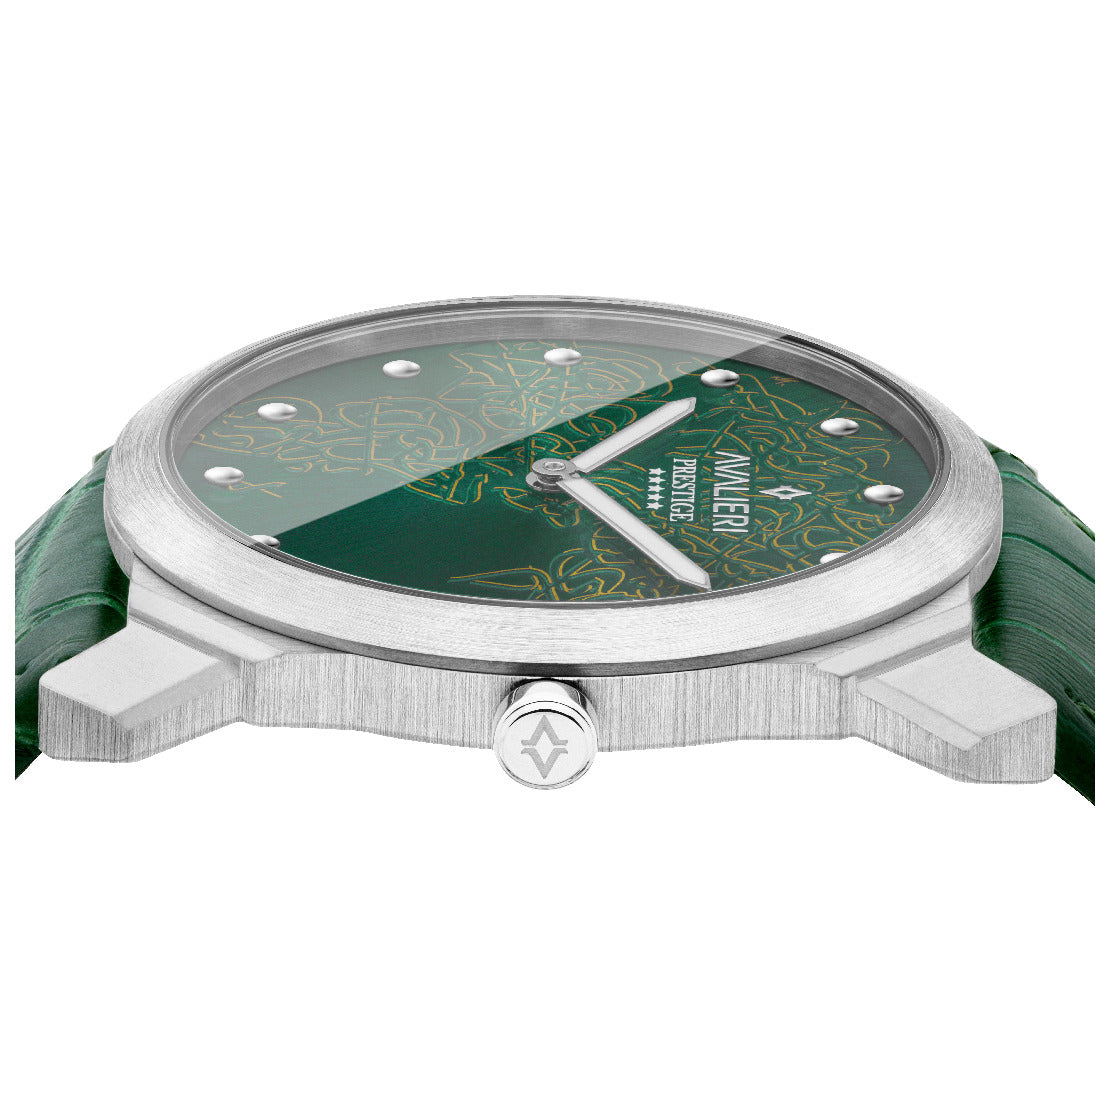 Avalieri Prestige Men's Watch, Swiss Quartz Movement, Green Dial - AP-0094